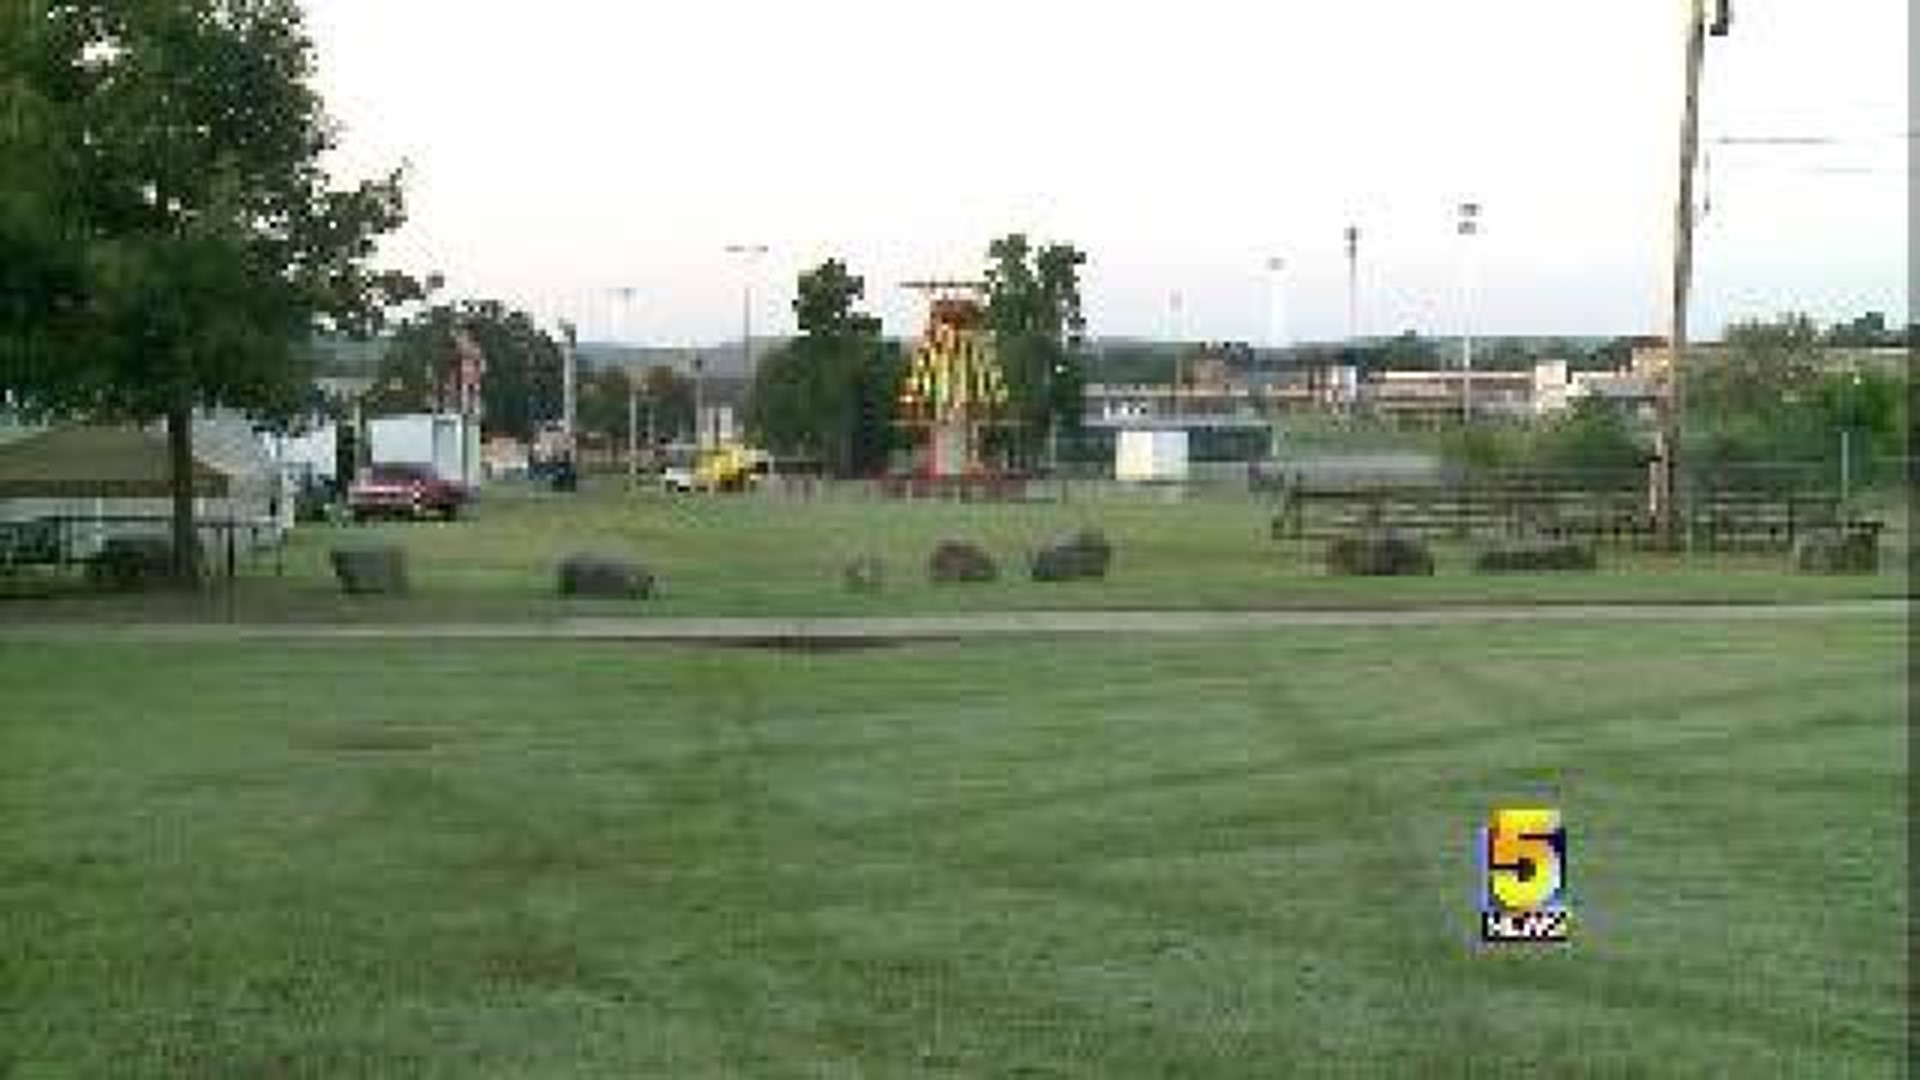 Sebastian County Fair Kicks Off